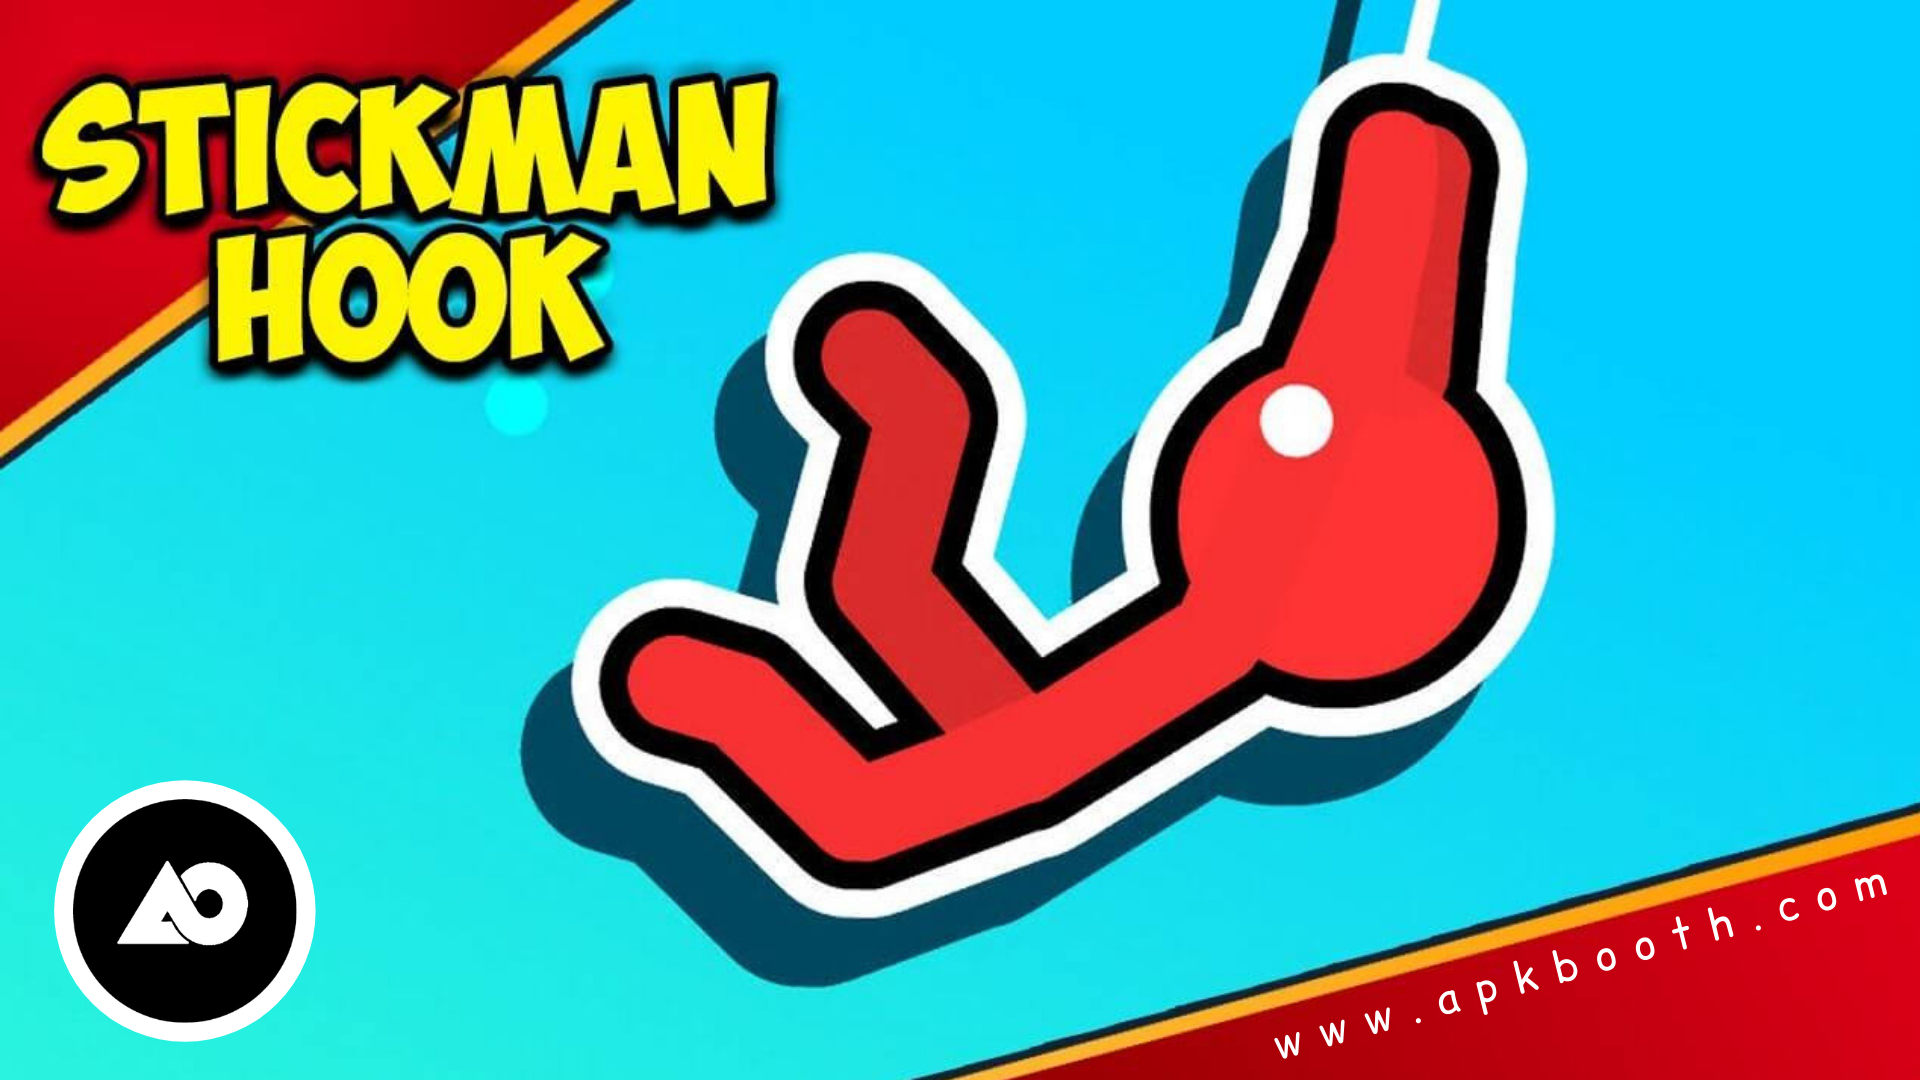 Download Stickman Hook mod to Unlock all Skins